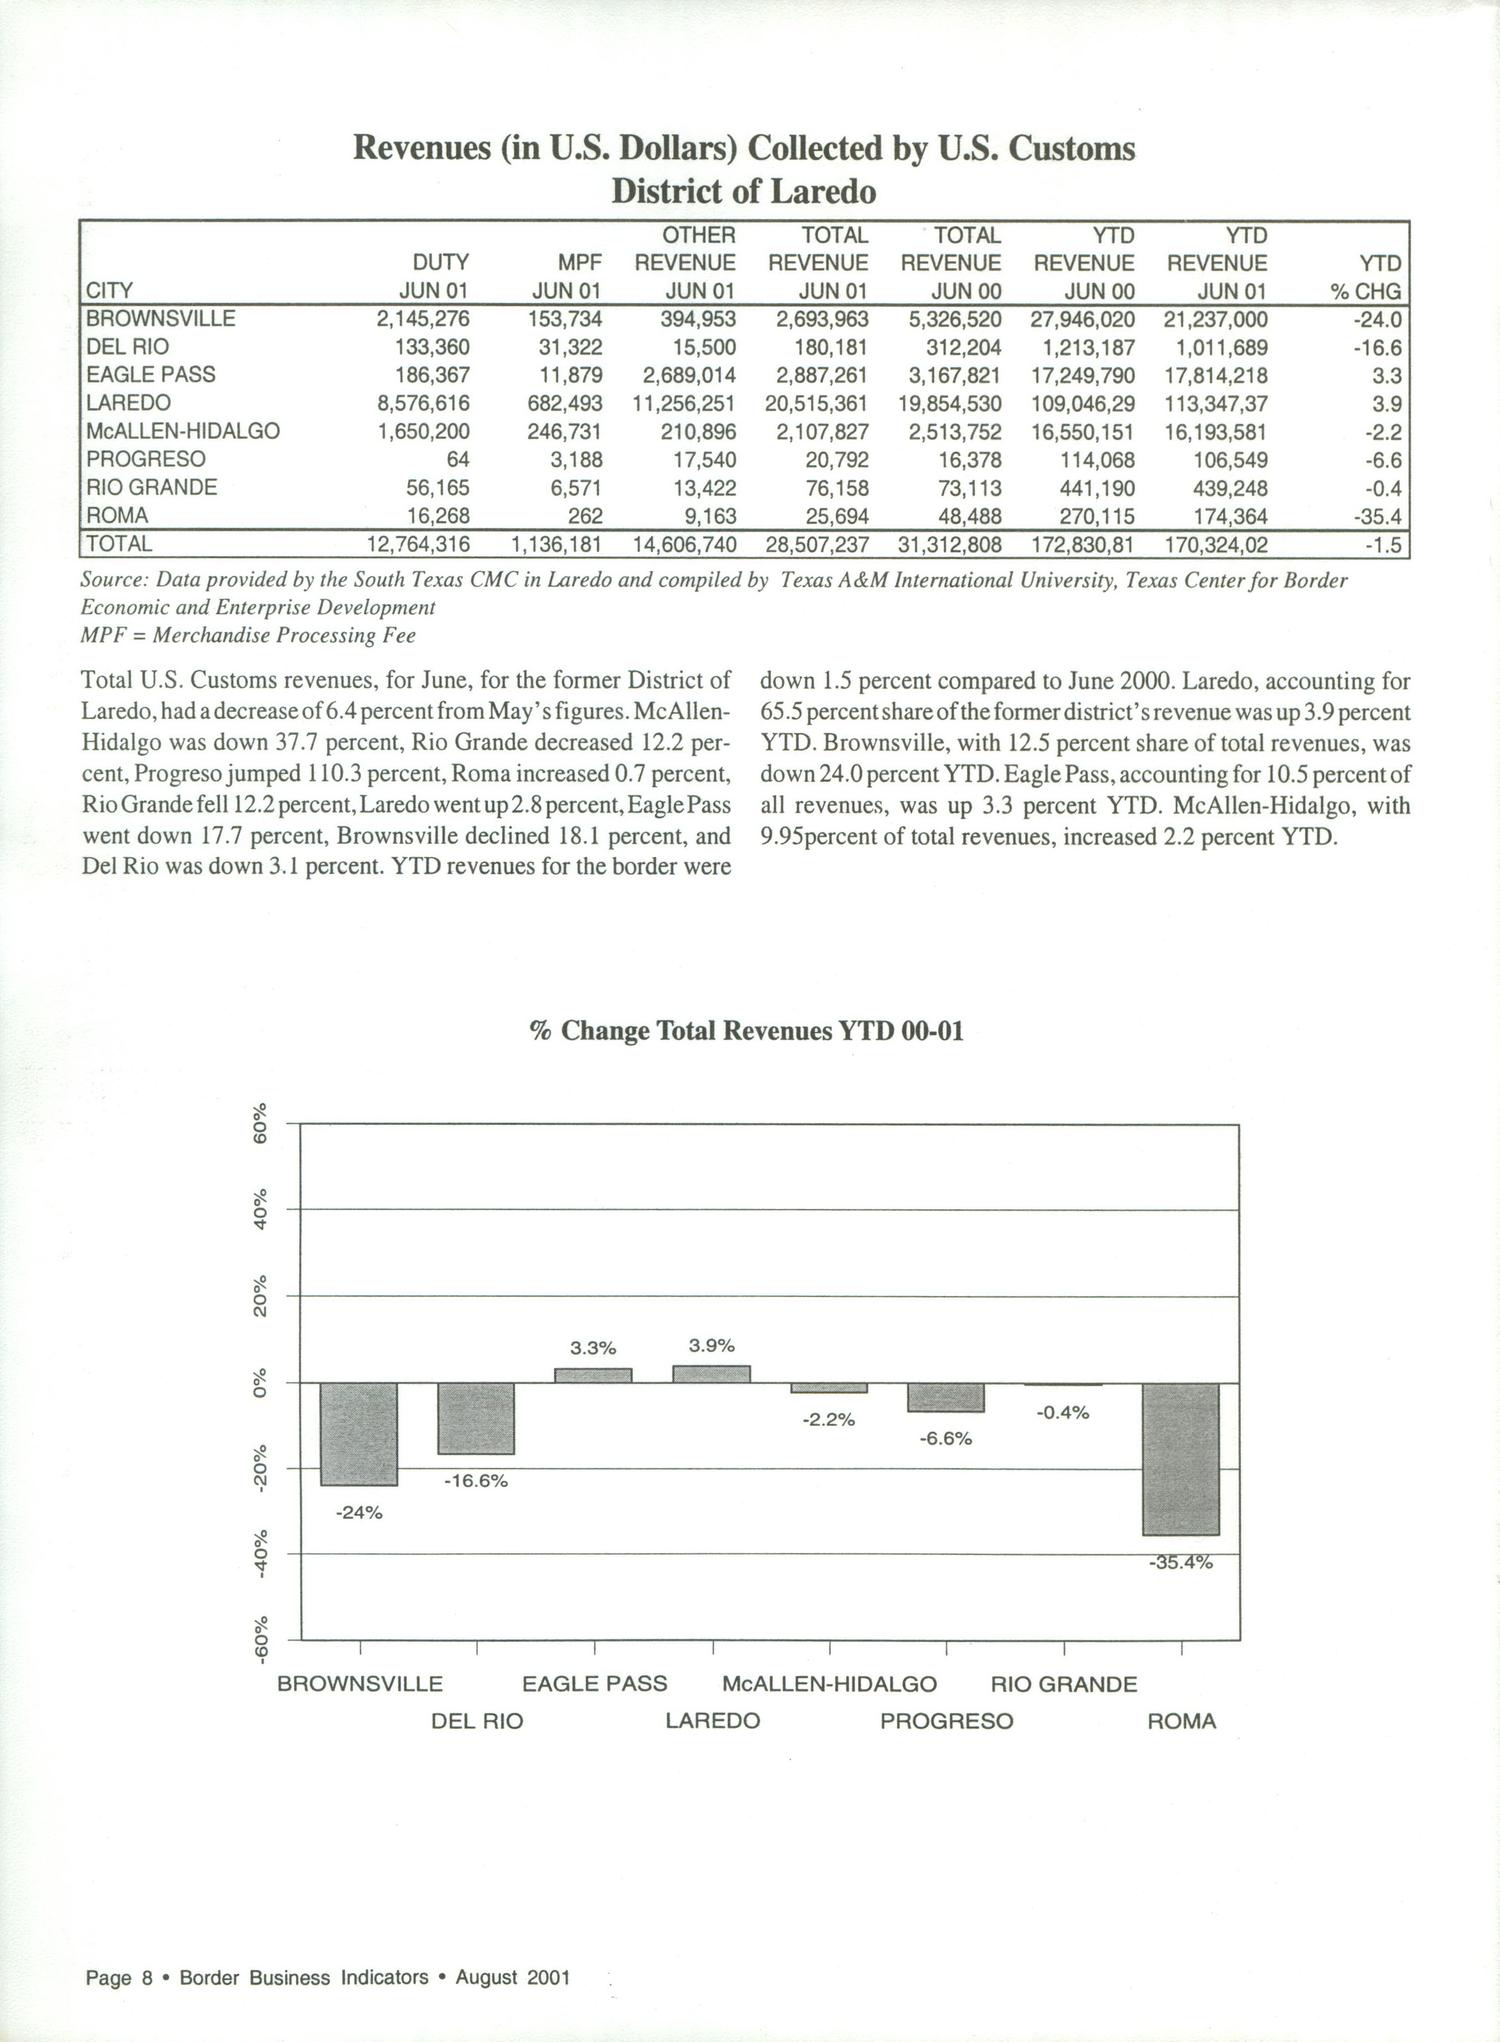 Border Business Indicators, Volume 25, Number 8, August 2001
                                                
                                                    8
                                                